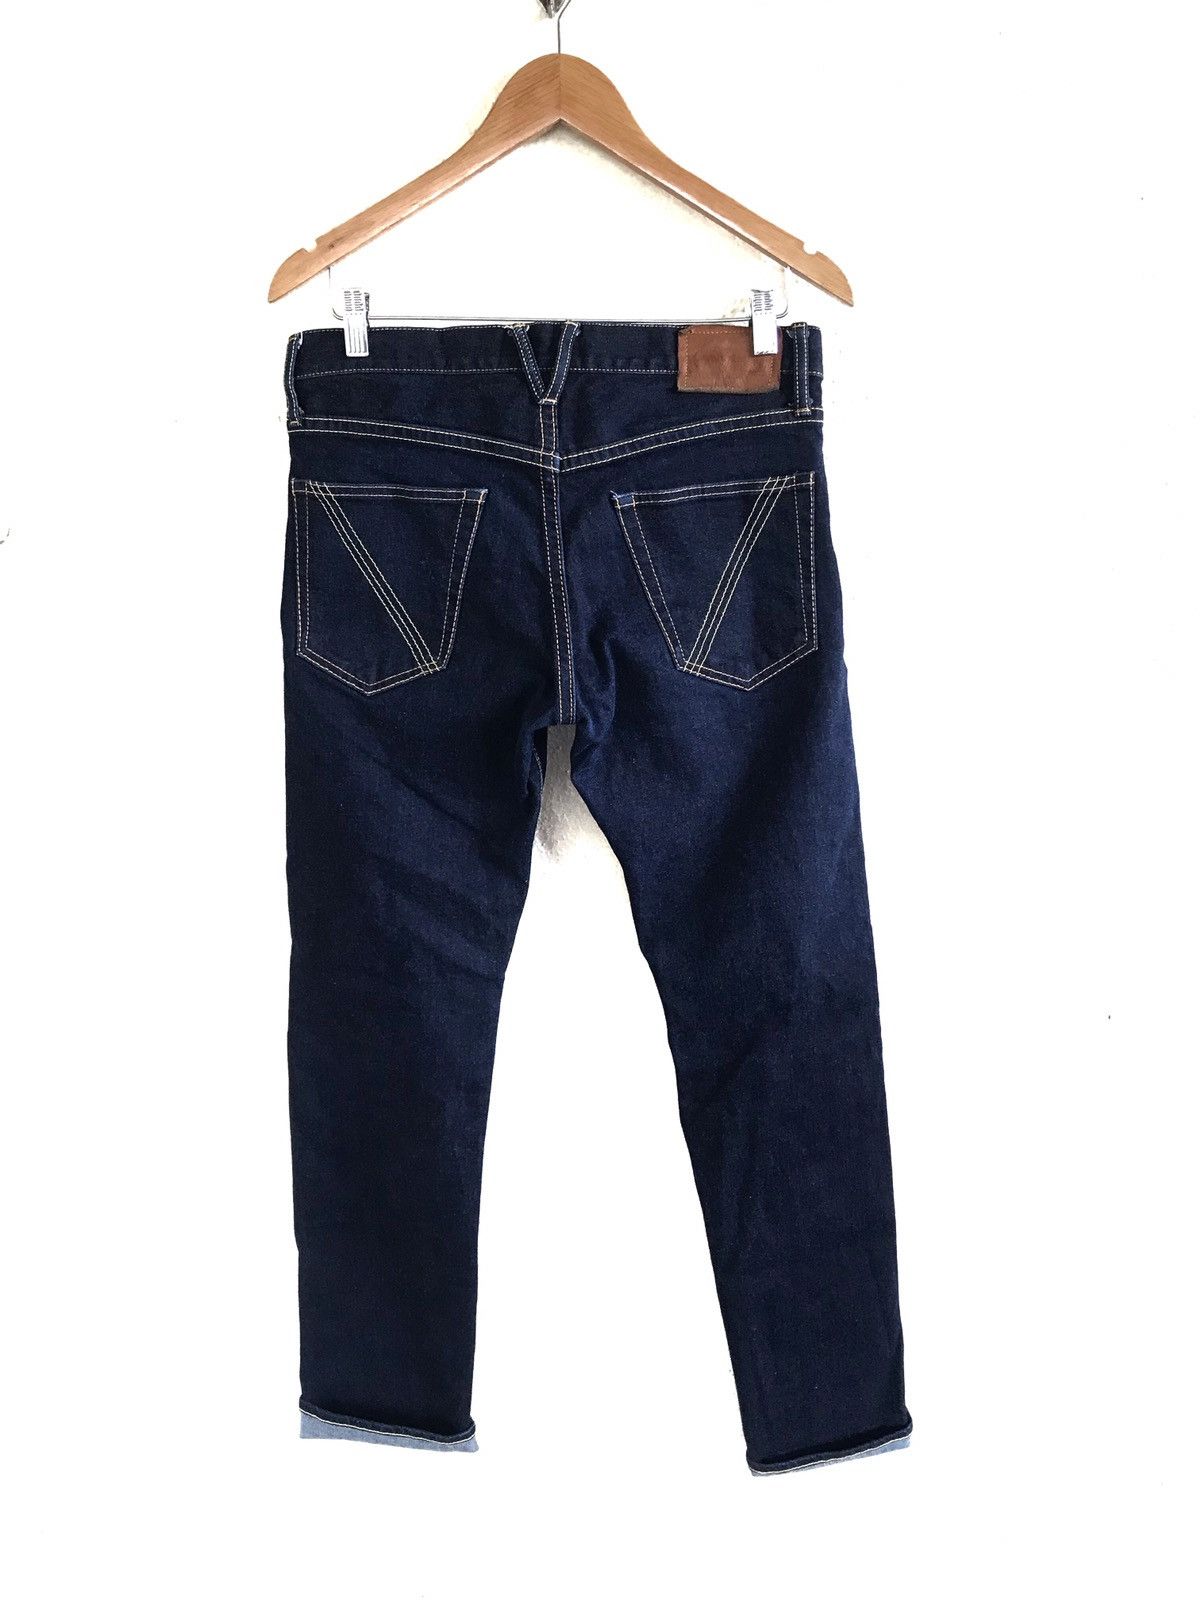 VANQUISH Japan Selvedge Skinny Jeans - 6